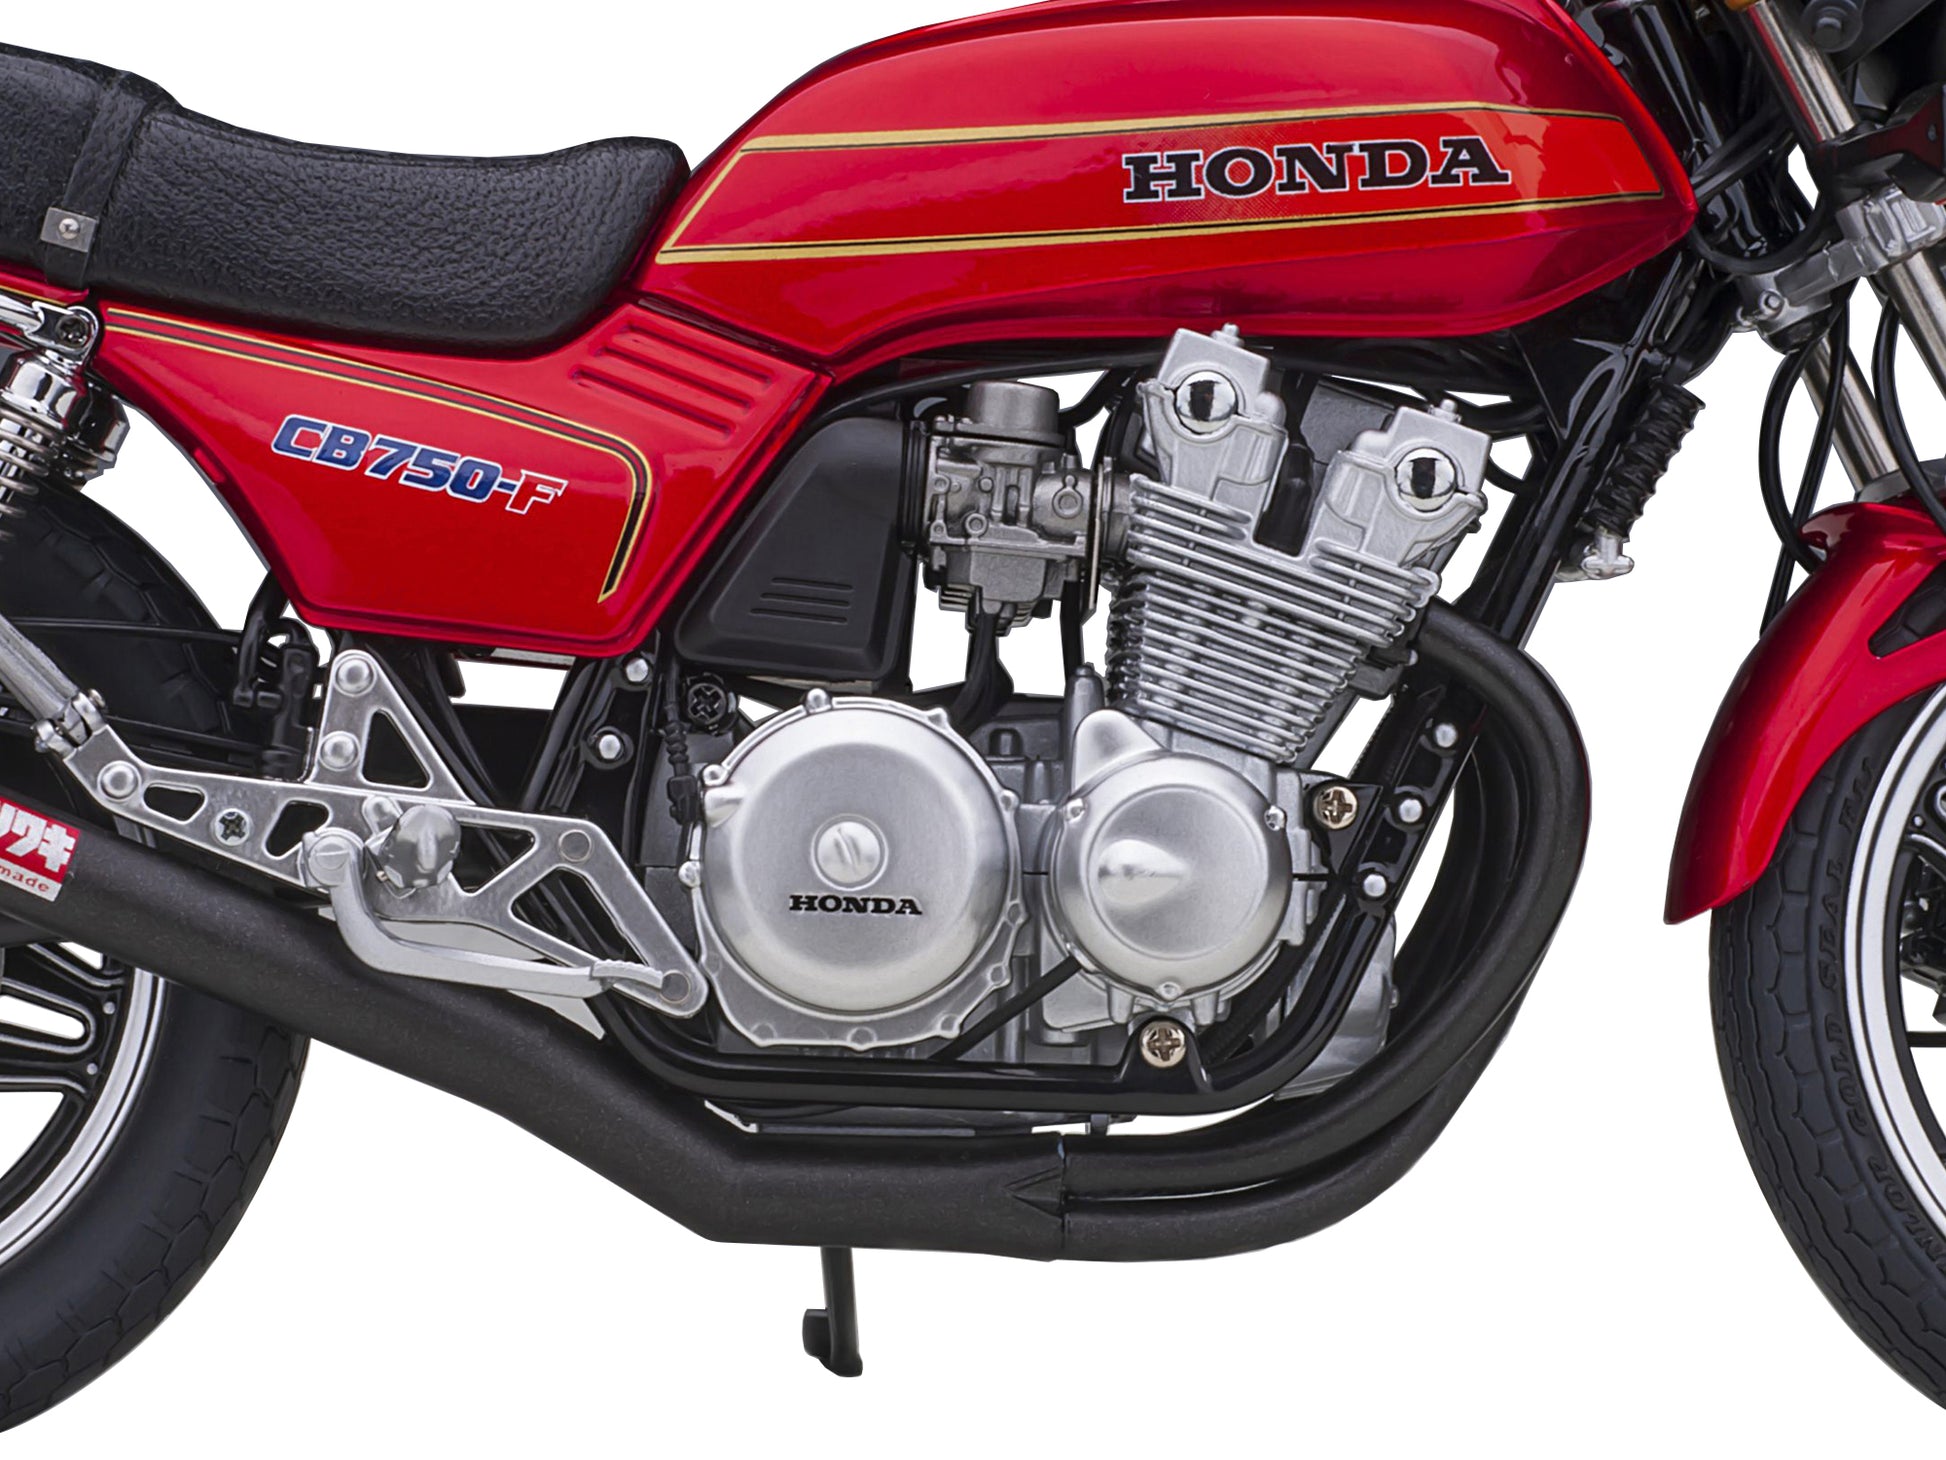 honda cb750f motorcycle red with helmet "baribari legend" (1986) ova 1/12 model